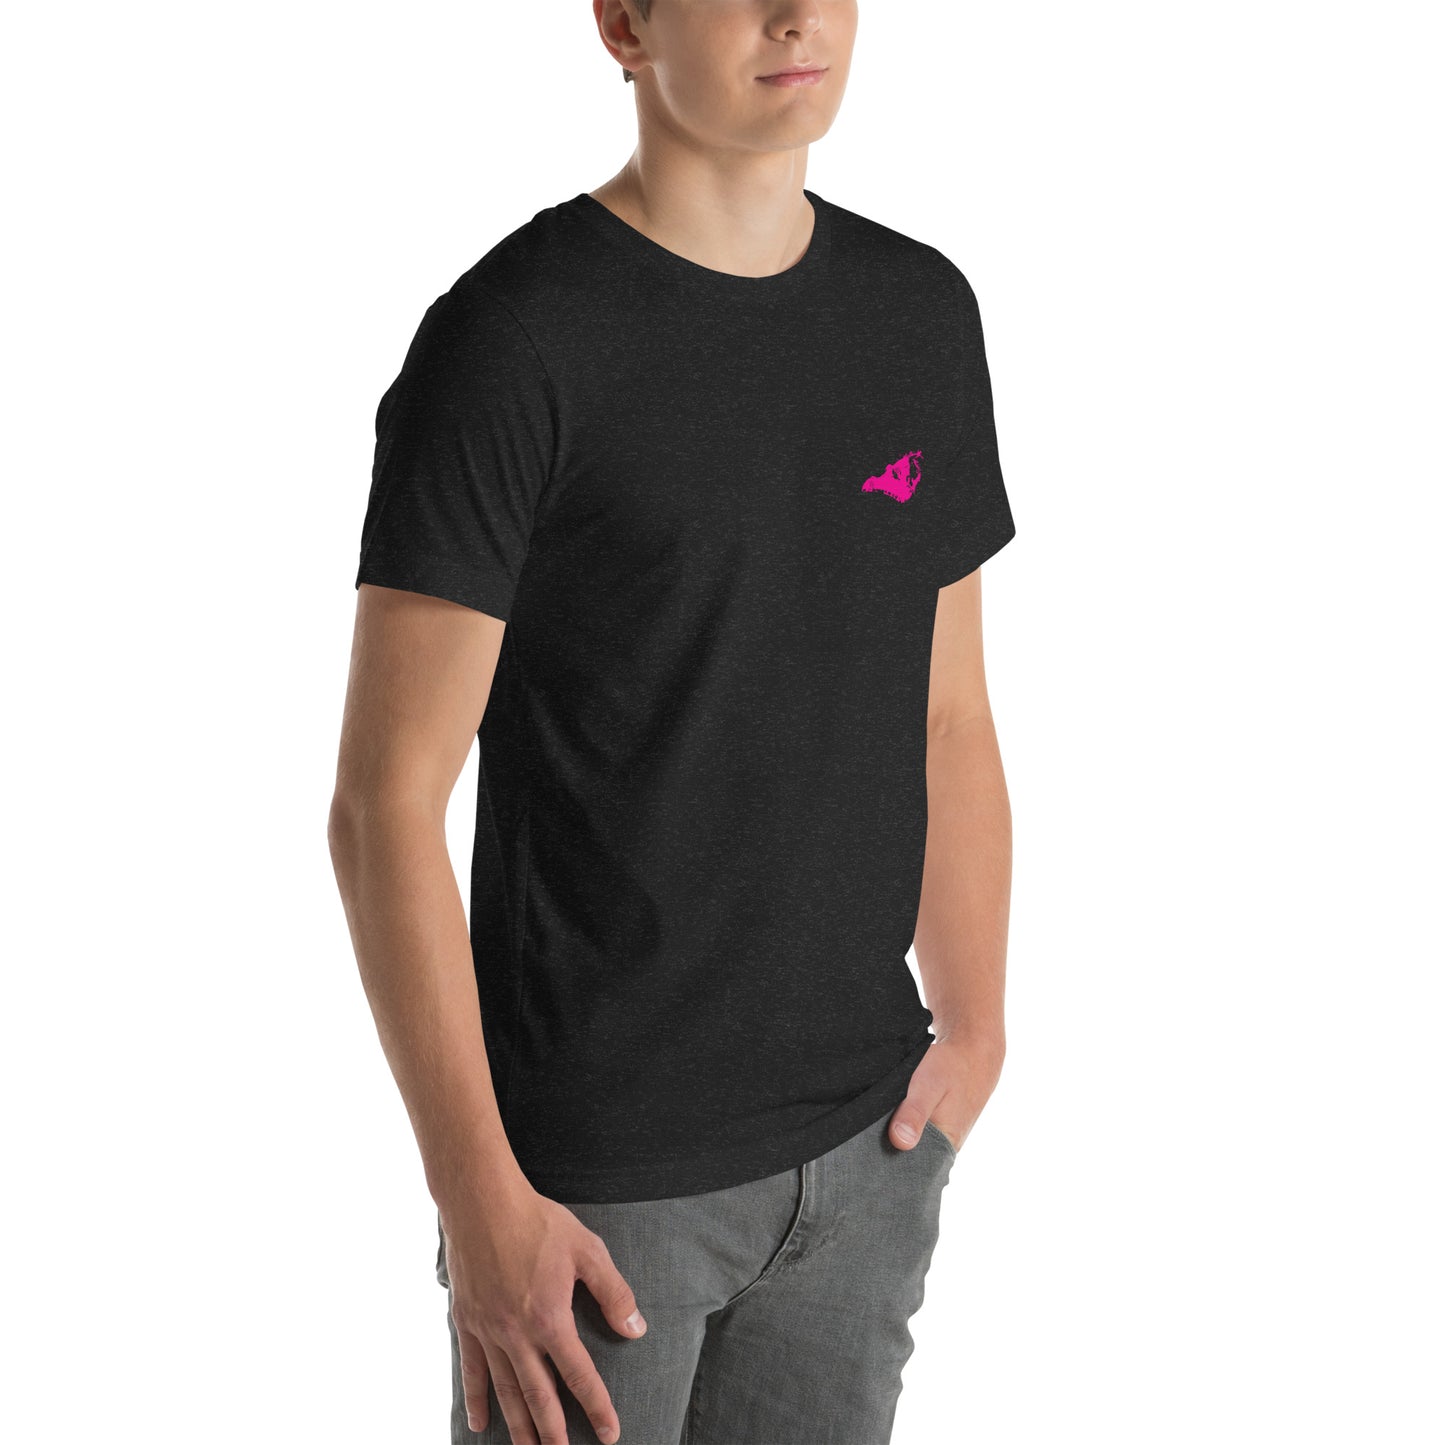 Midwich Cuckoos Pink Back Print T-shirt